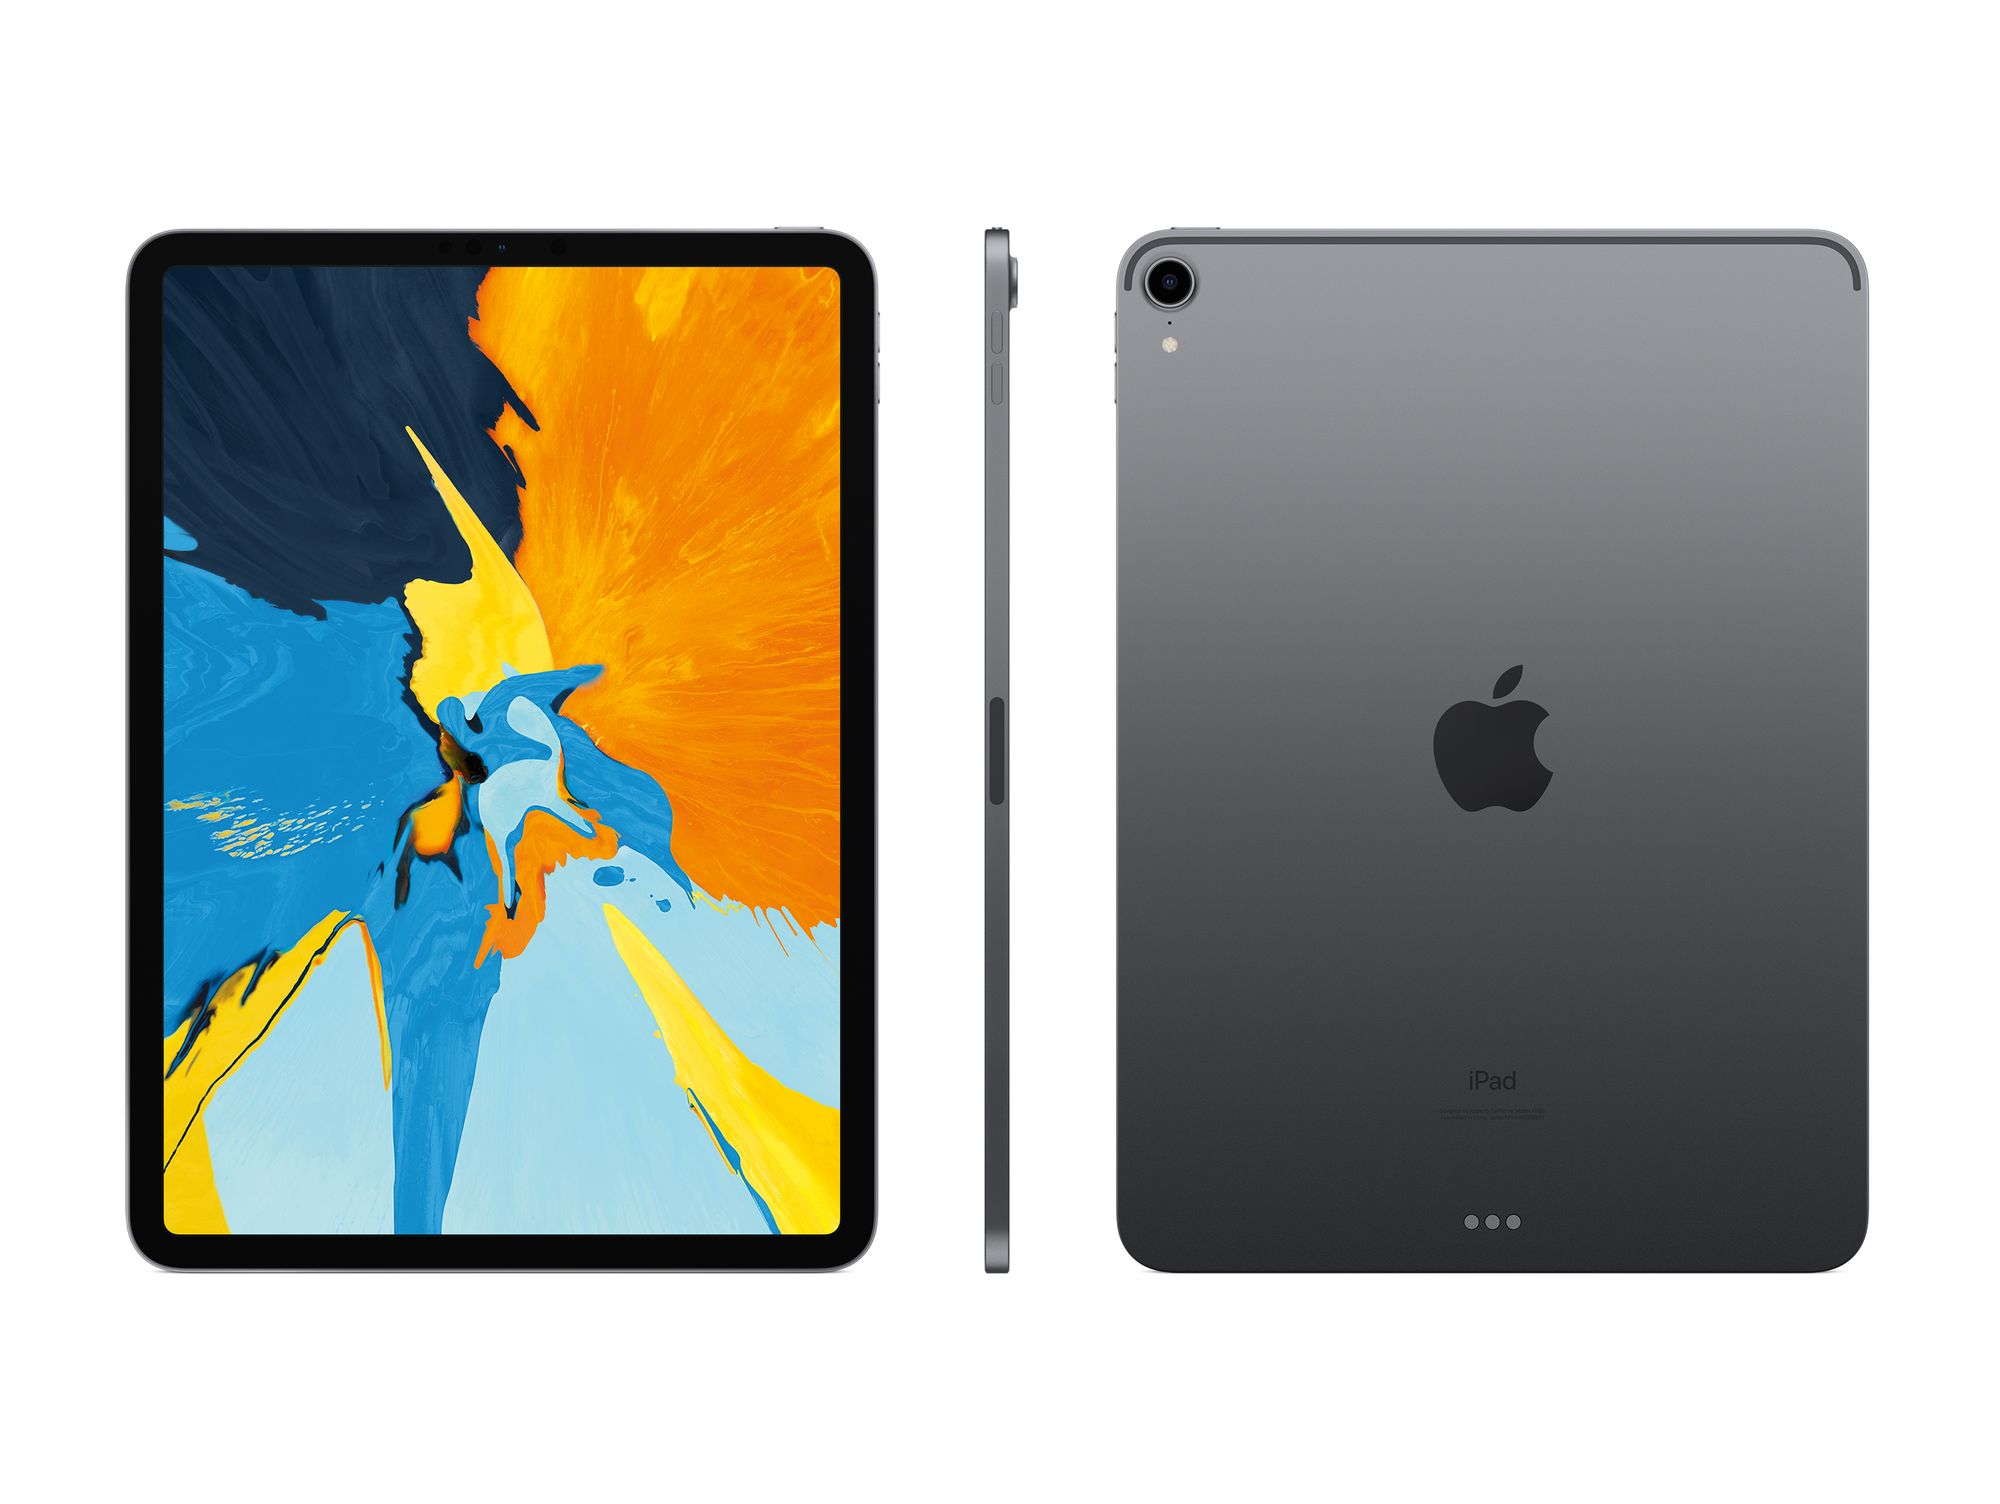 Apple iPad Pro 11 2018 Wi-Fi 1TB Space Gray (MTXV2)